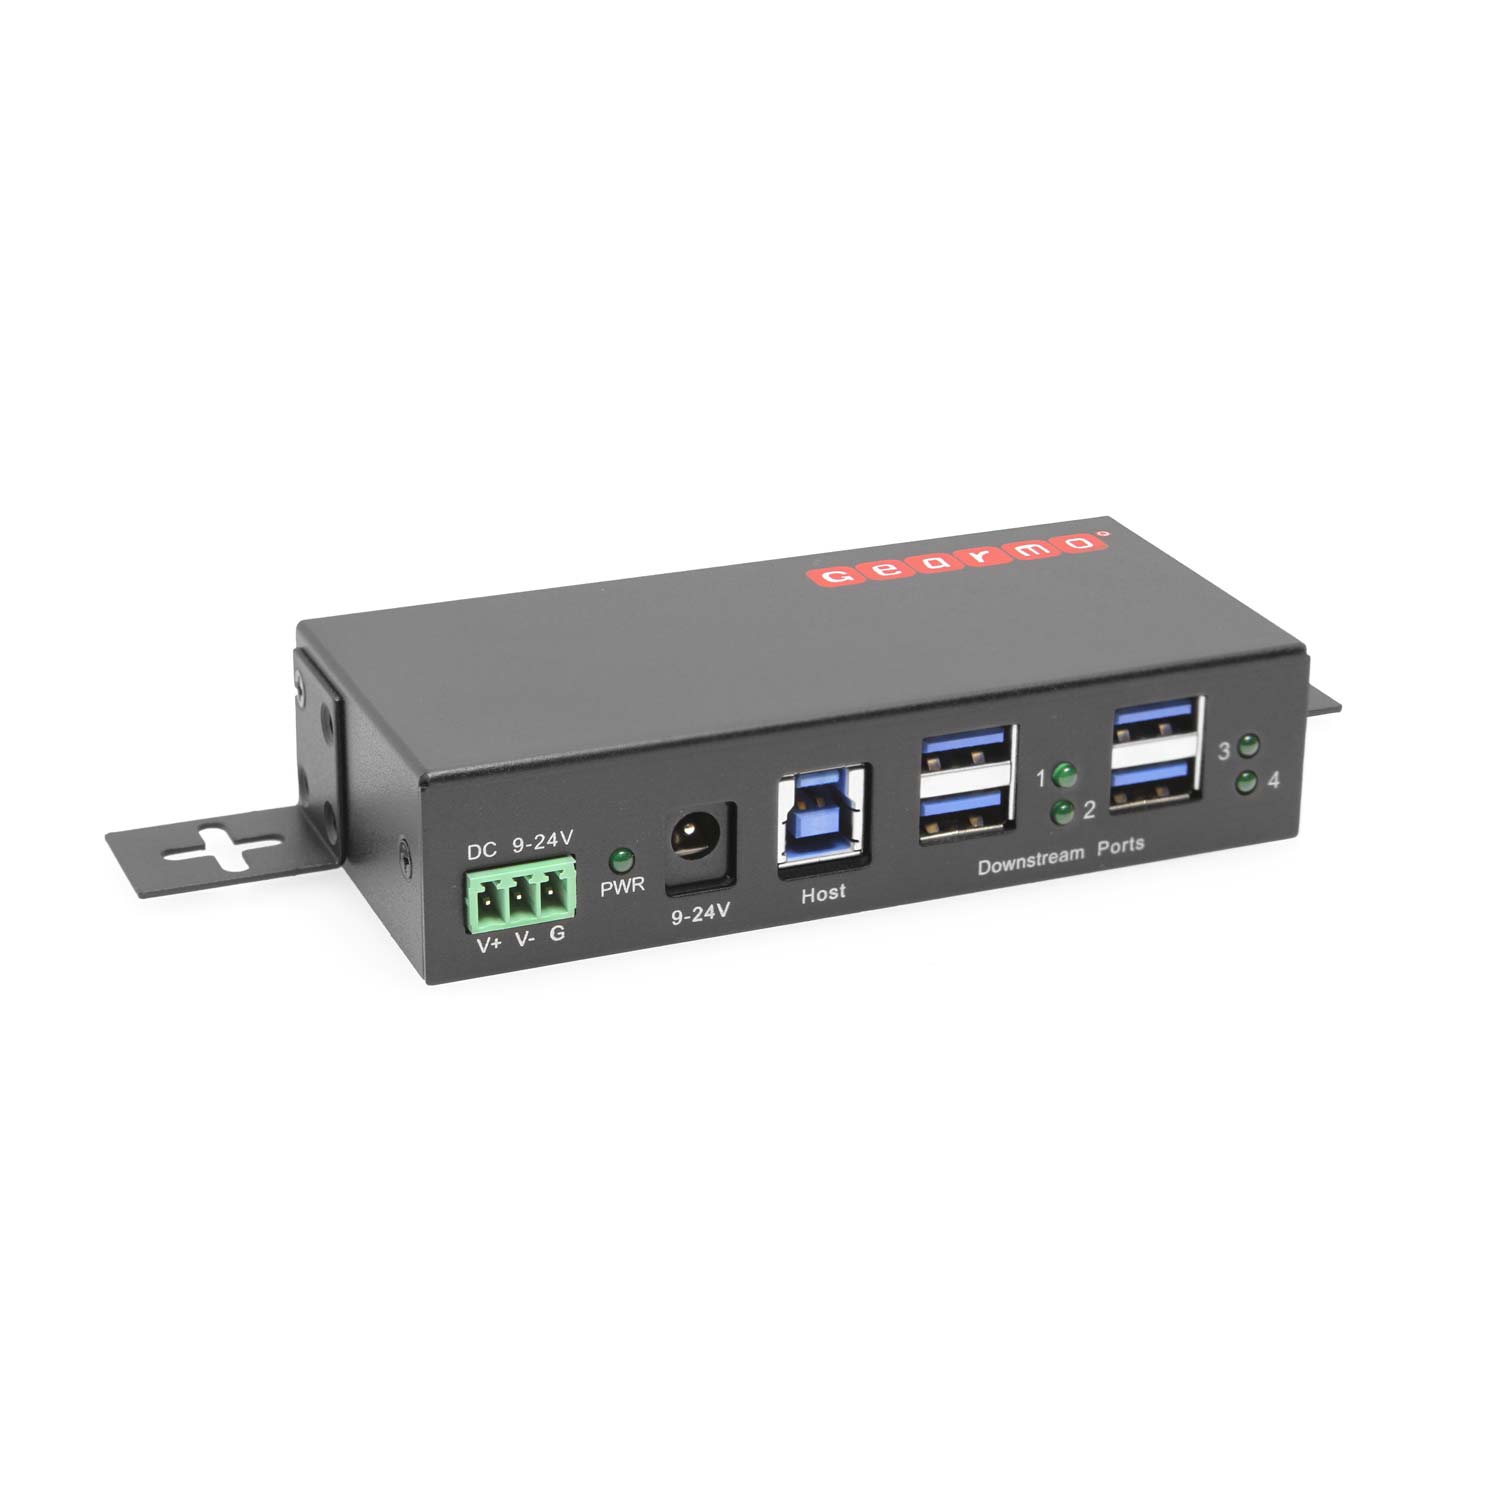 IOGEAR - GUH304P - met(AL) P4P Hub, 4-Port USB 3.0 Powered Hub